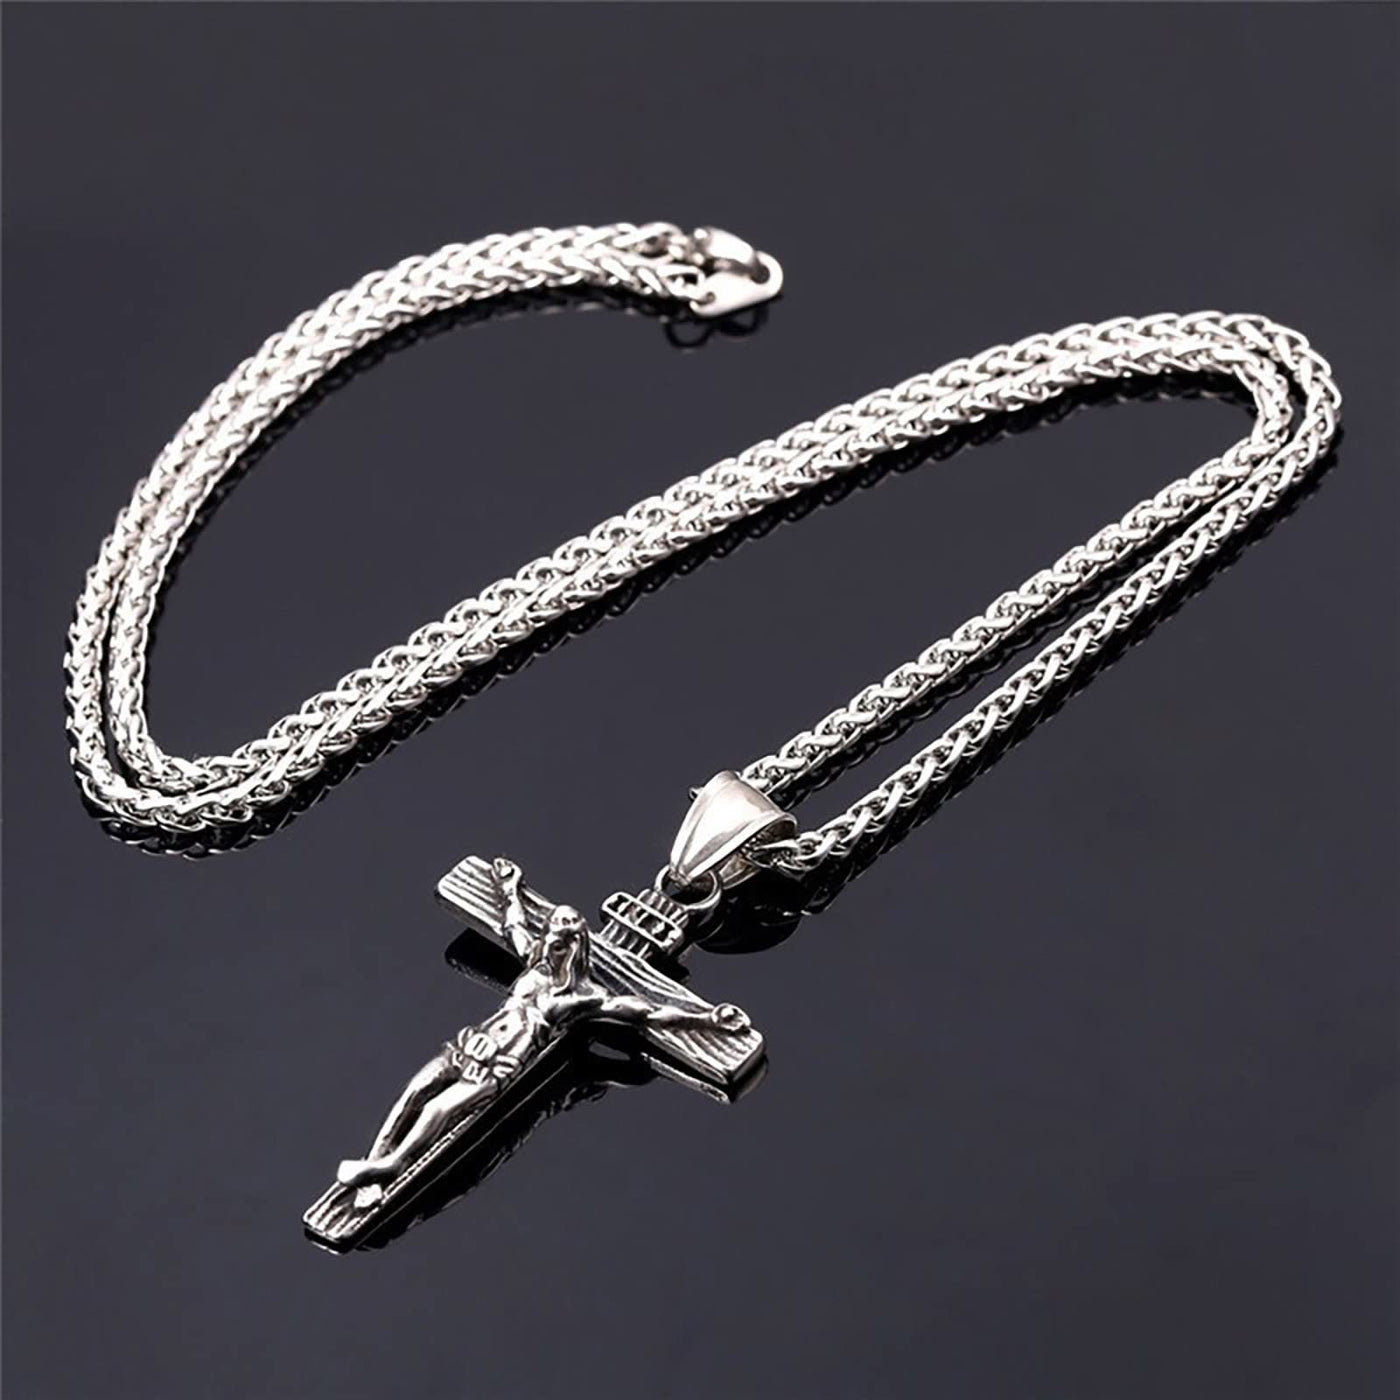 "Life Of Christ" Jesus Cross Necklace